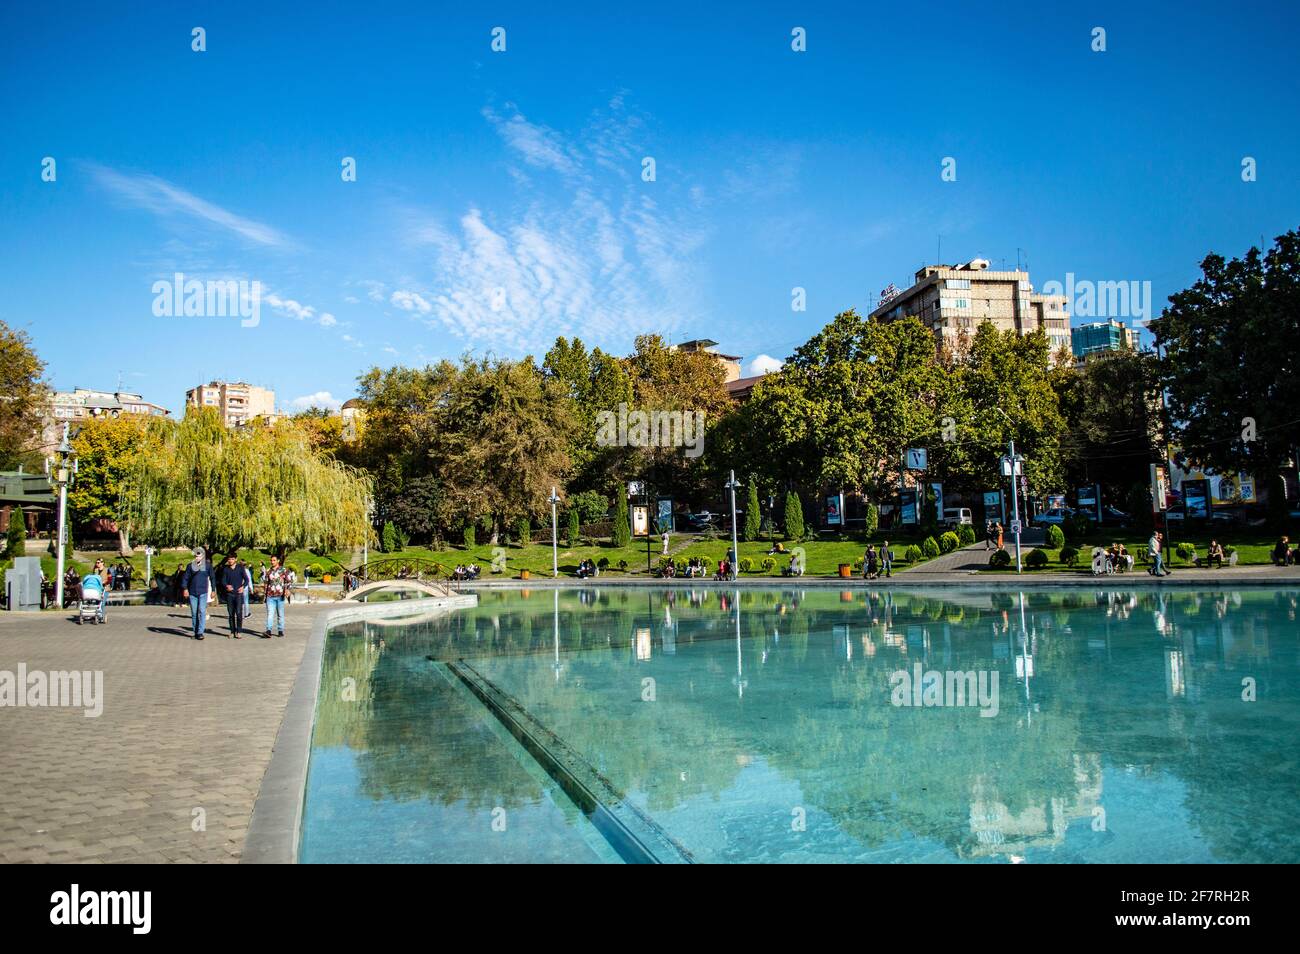 Yerevan, Armenia - October 31, 2019: The Swan Lake in Yerevan, Armenia Stock Photo